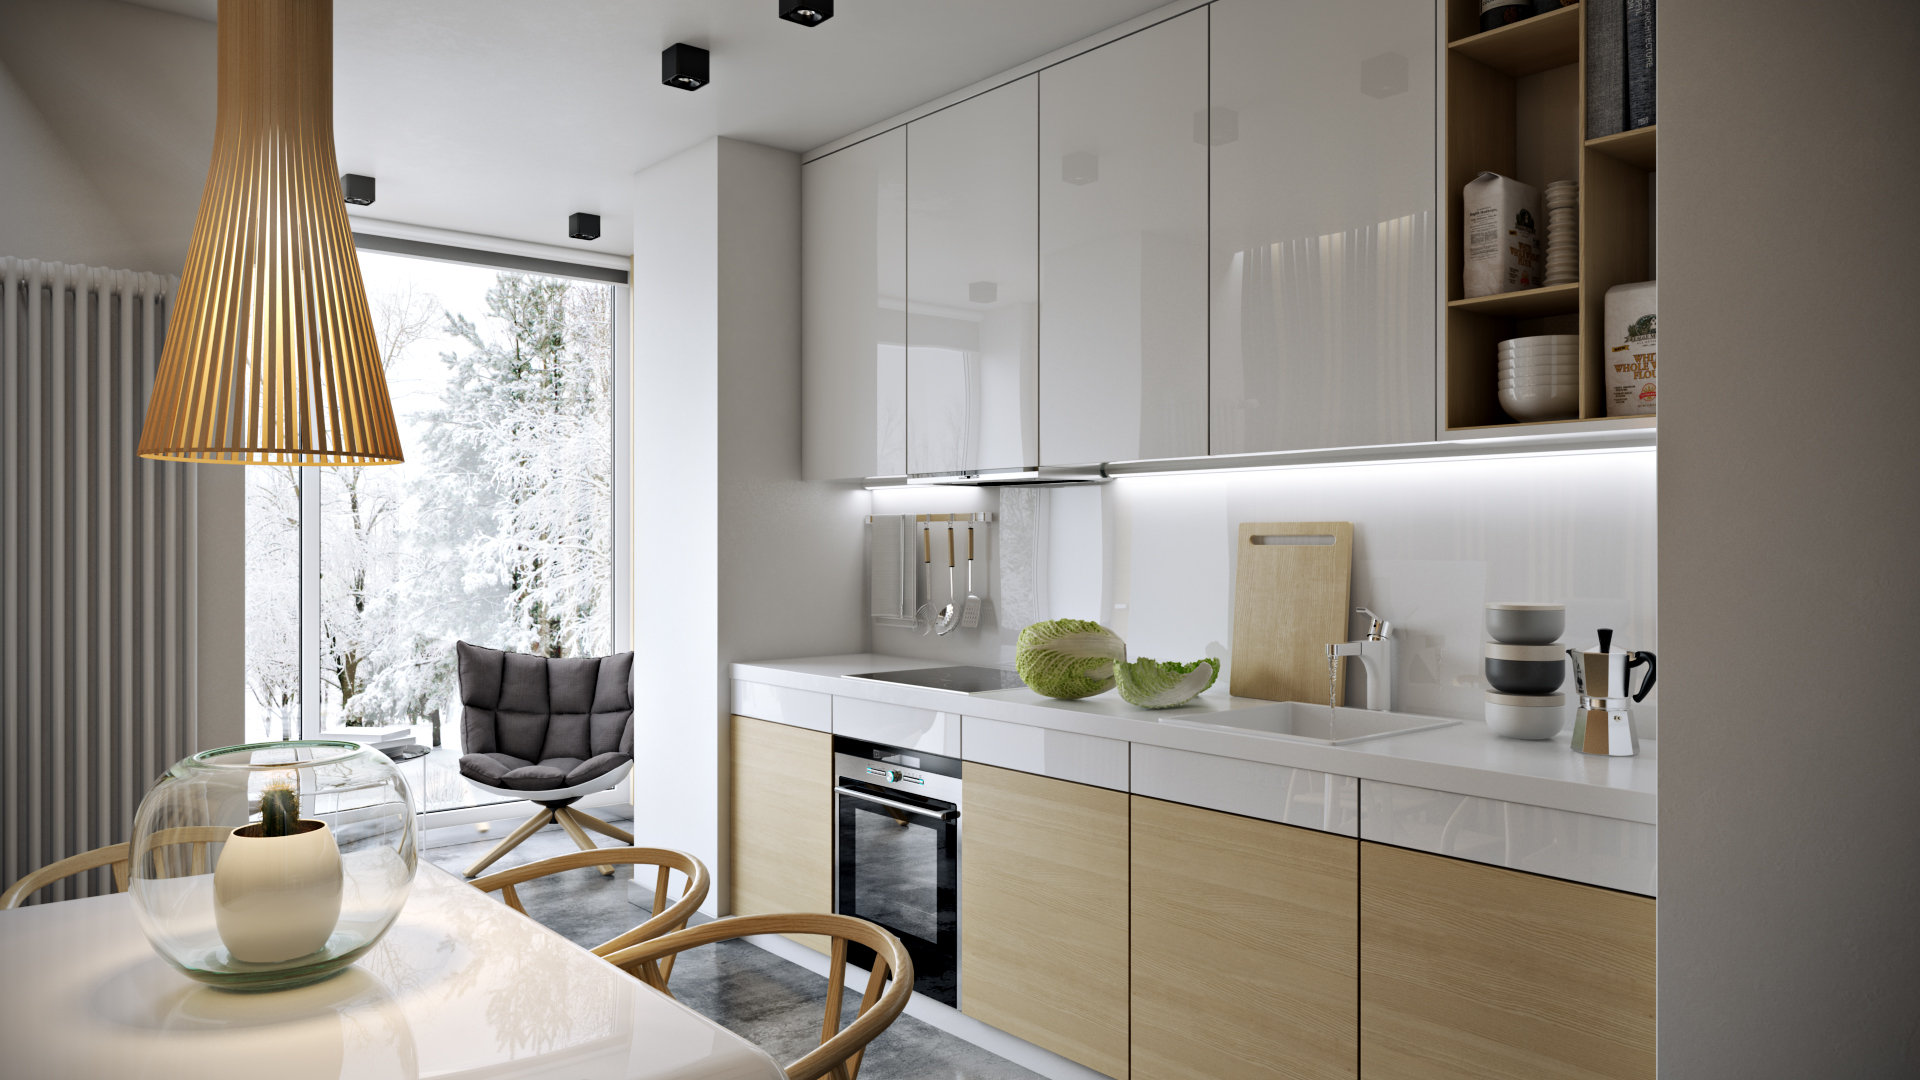 Дизайн бежево-белой кухни 11 кв м